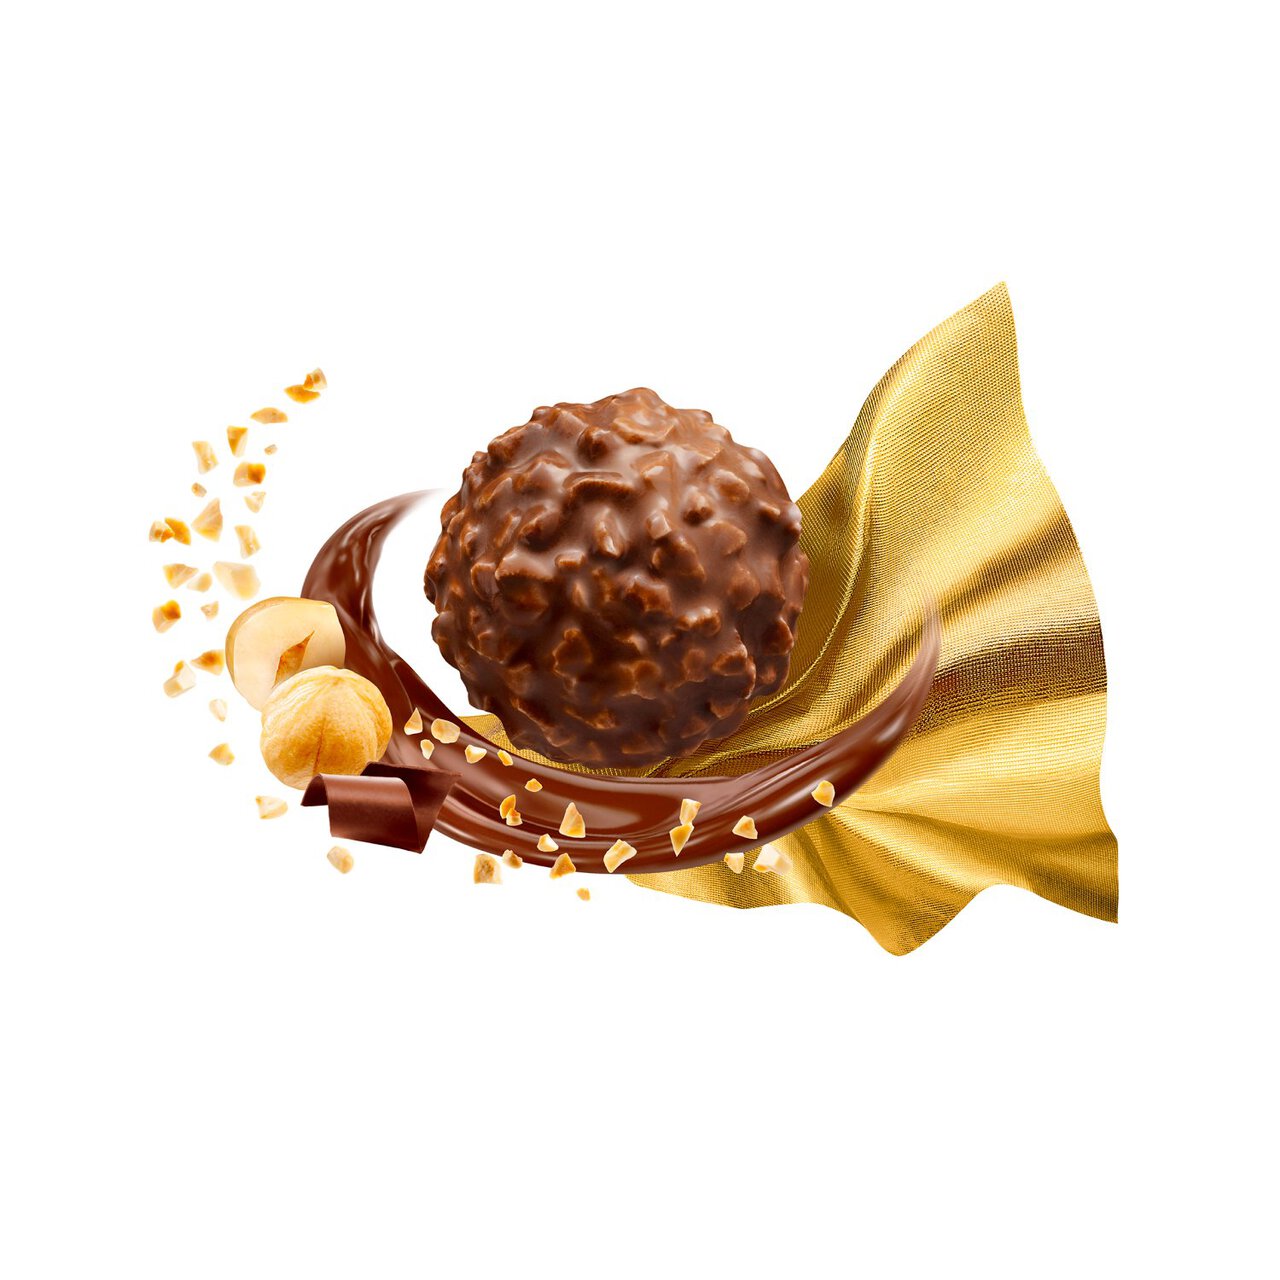 Ferrero Rocher 16 Pieces 200g